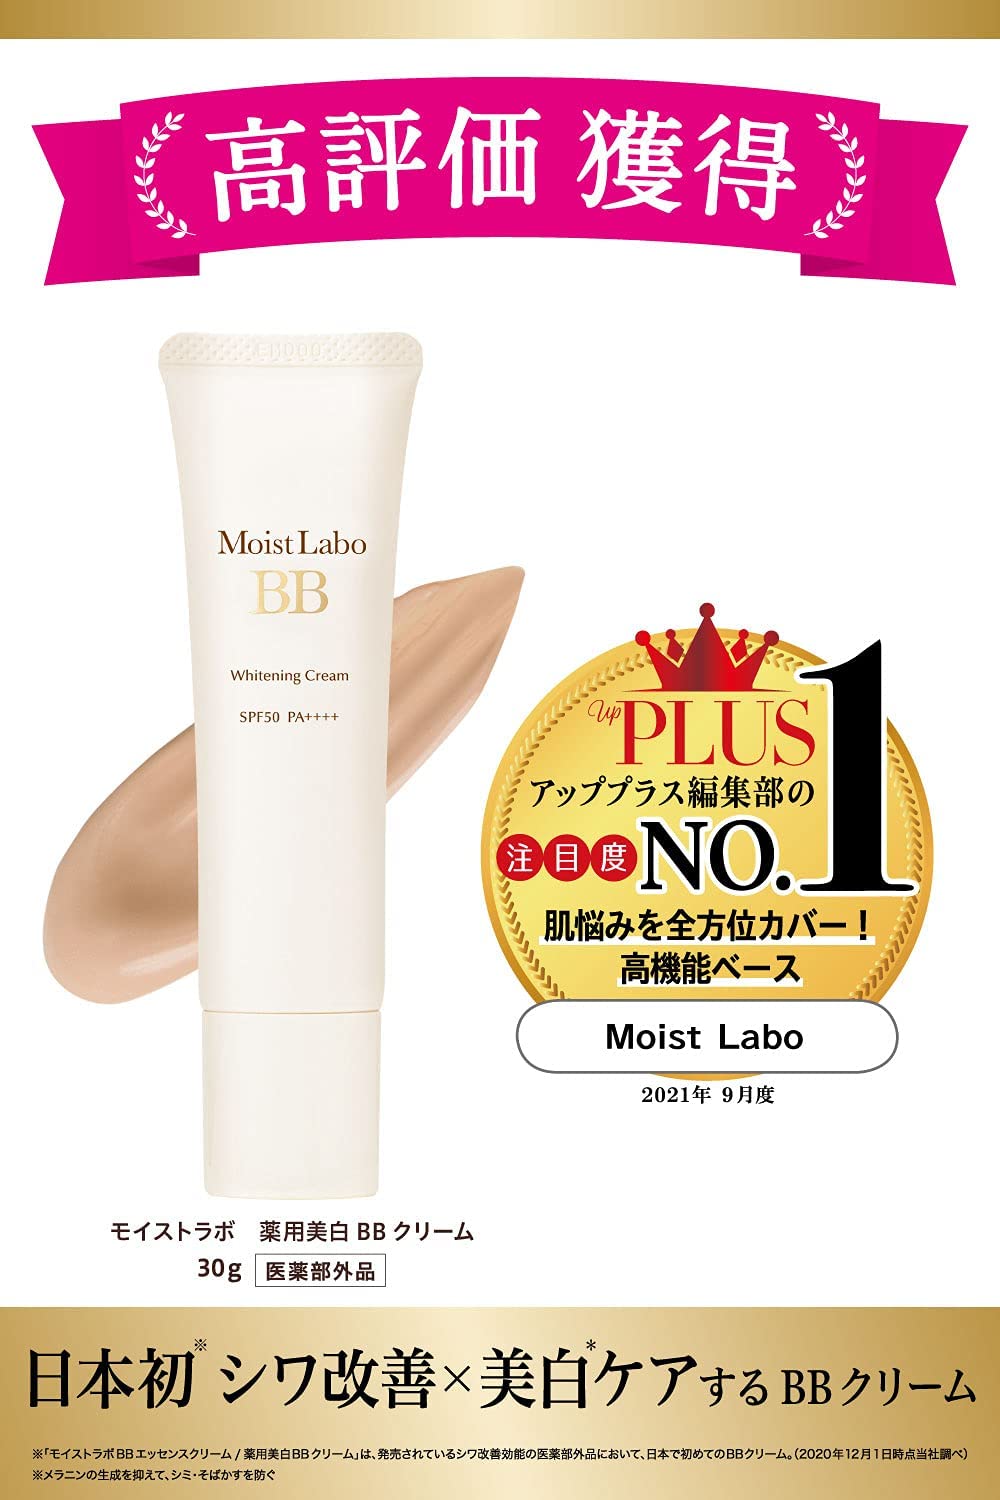 Moist Labo BB Whitening Cream 01 (Natural Beige) 30g